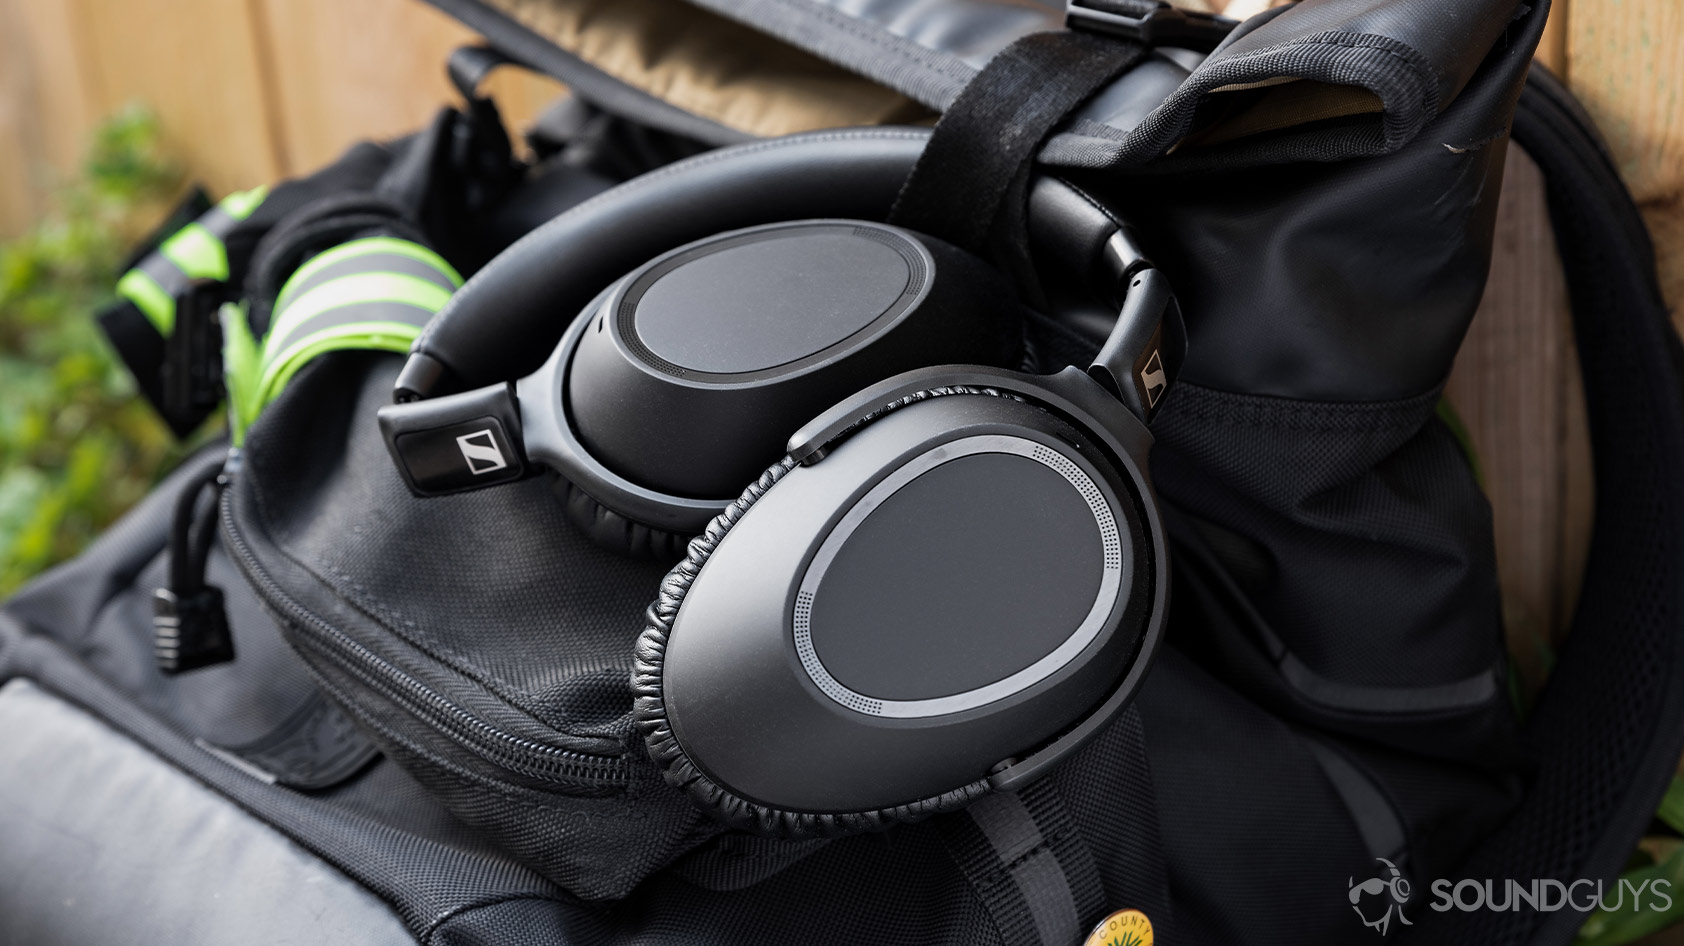 The Sennheiser PXC 550-II noise canceling headphones folded on the outside of a backpack.